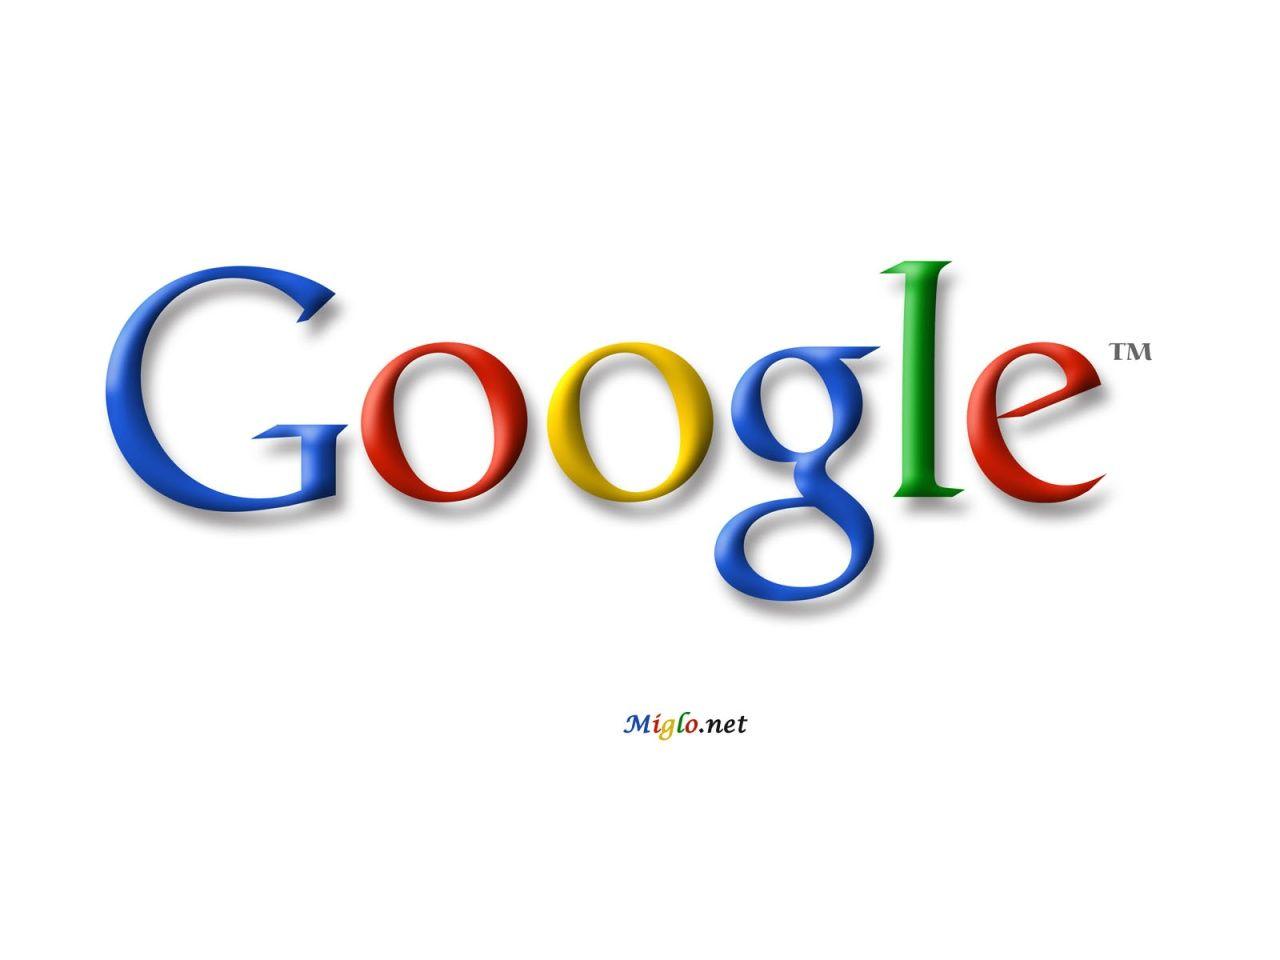 Google Wallpaper Theme 1280x960PX Wallpaper Google Background